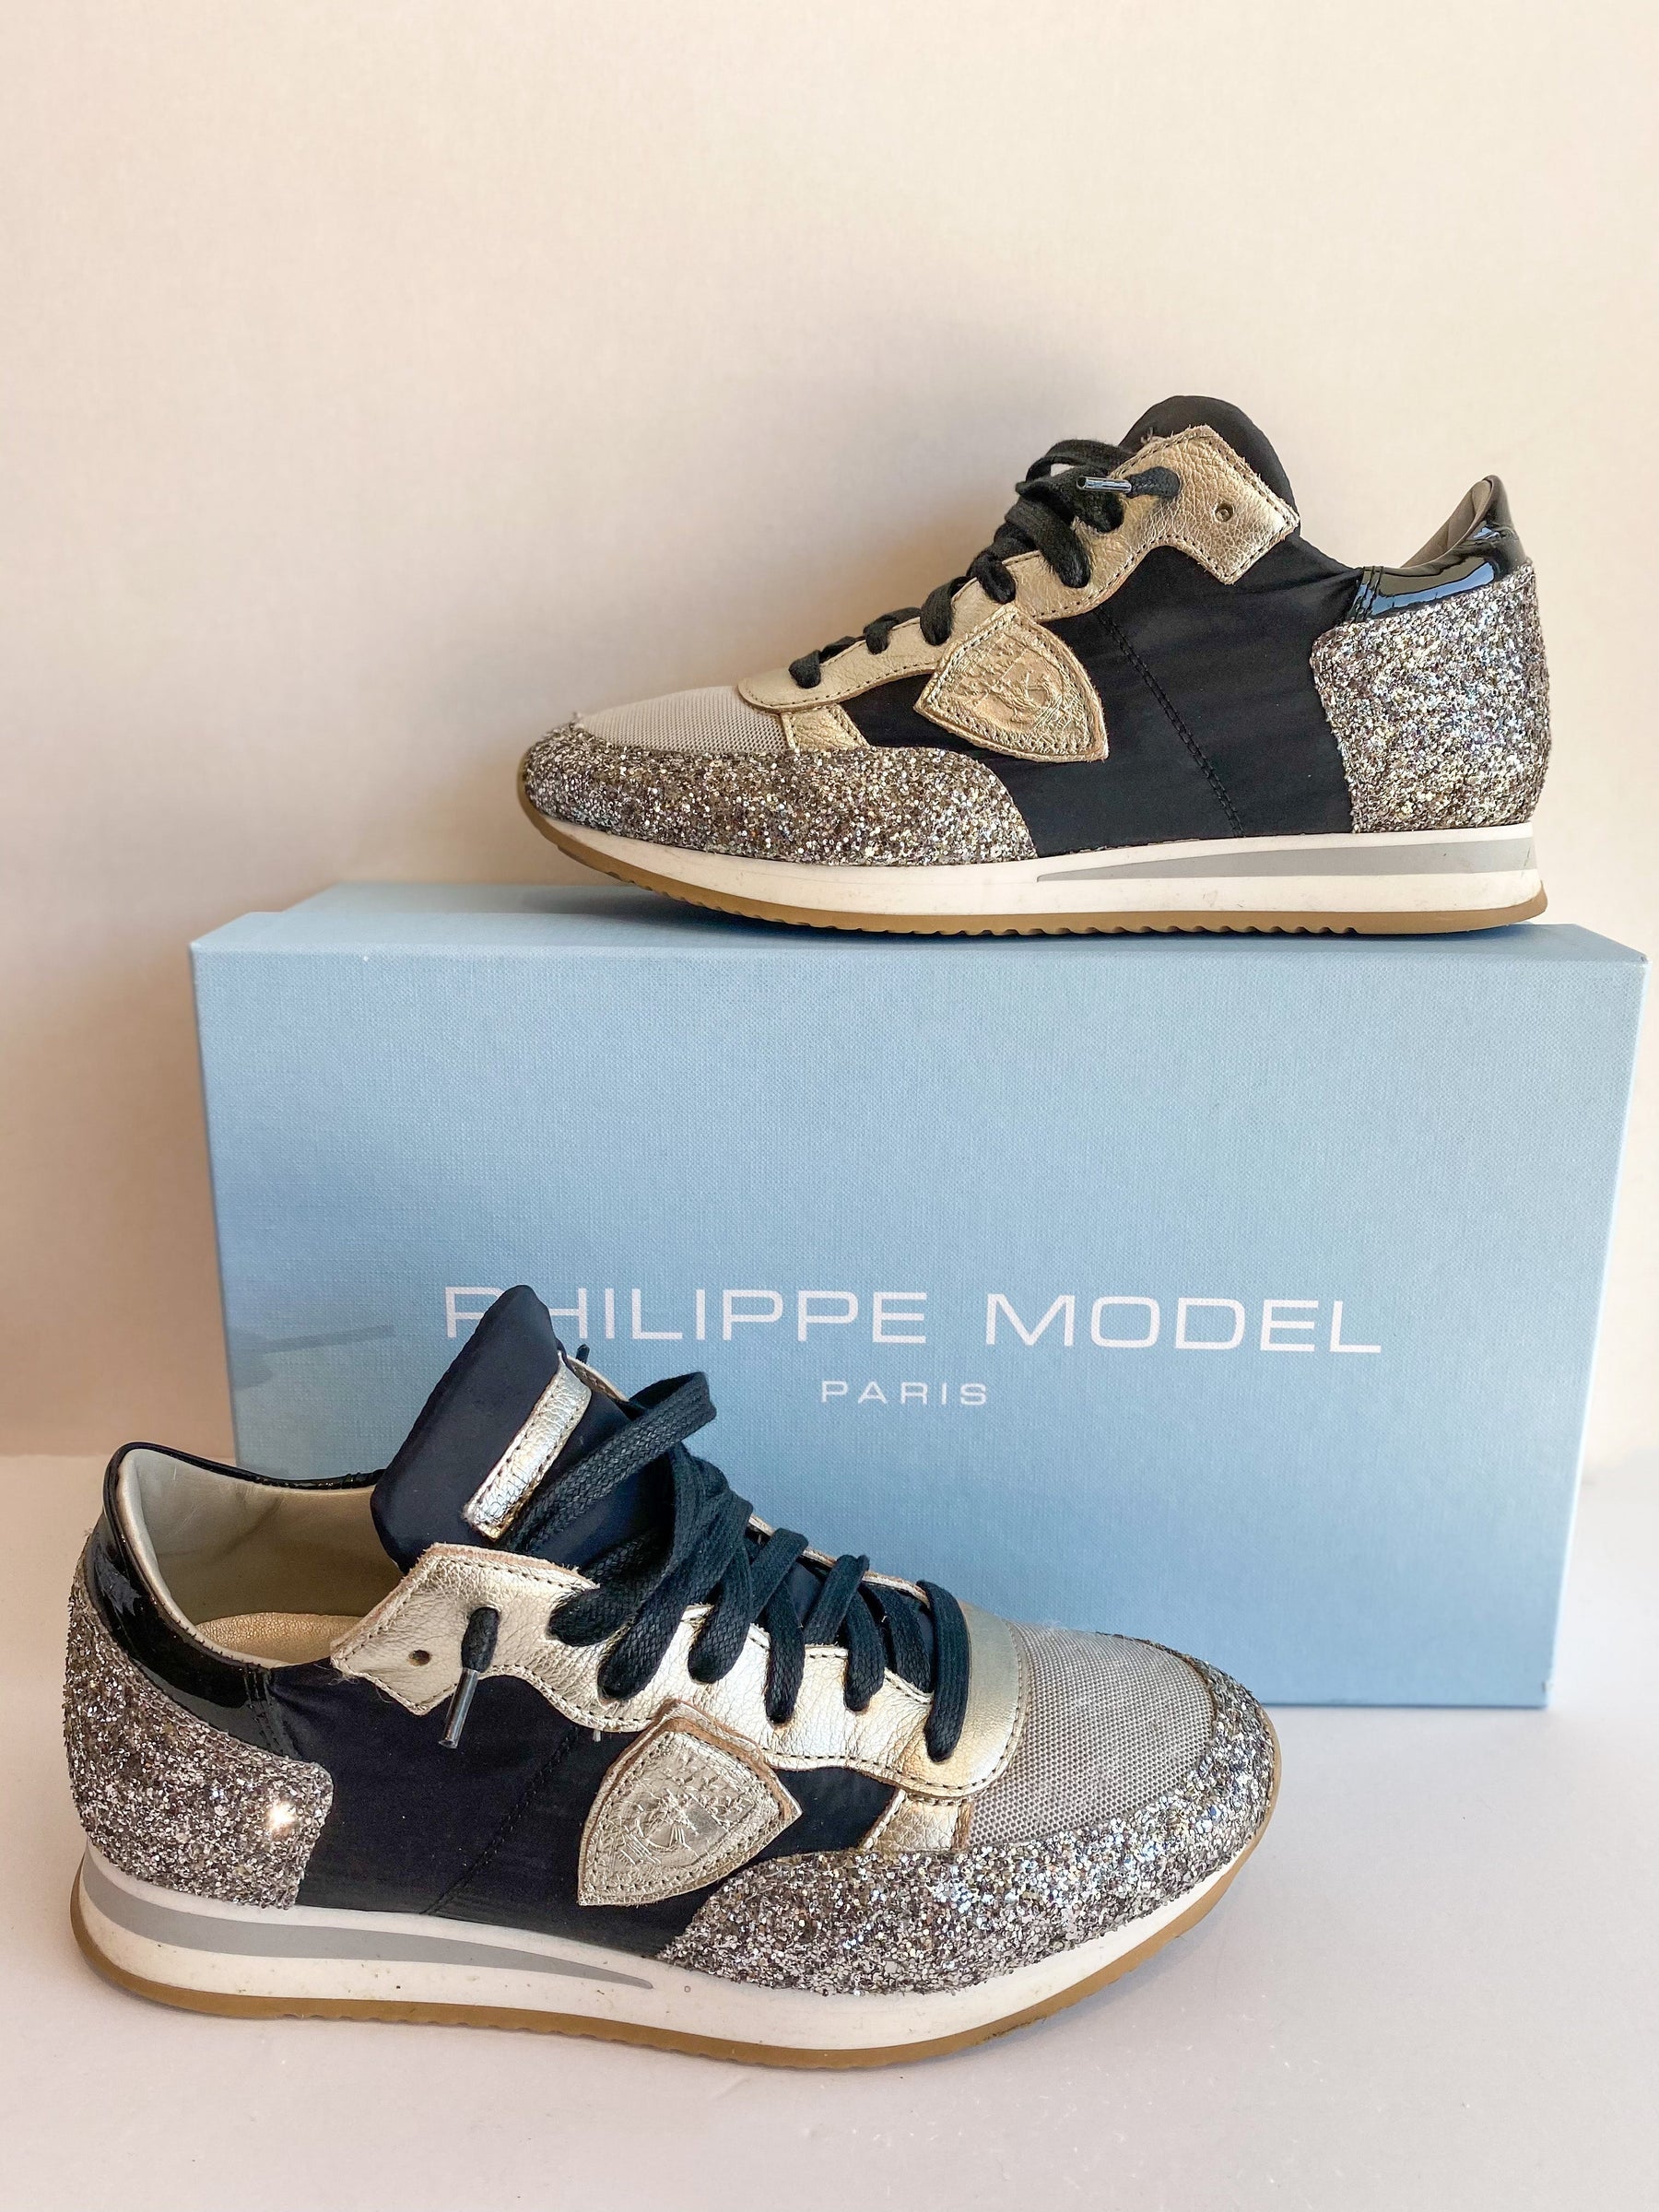 philippe model trpx basic platinum noir sneakers